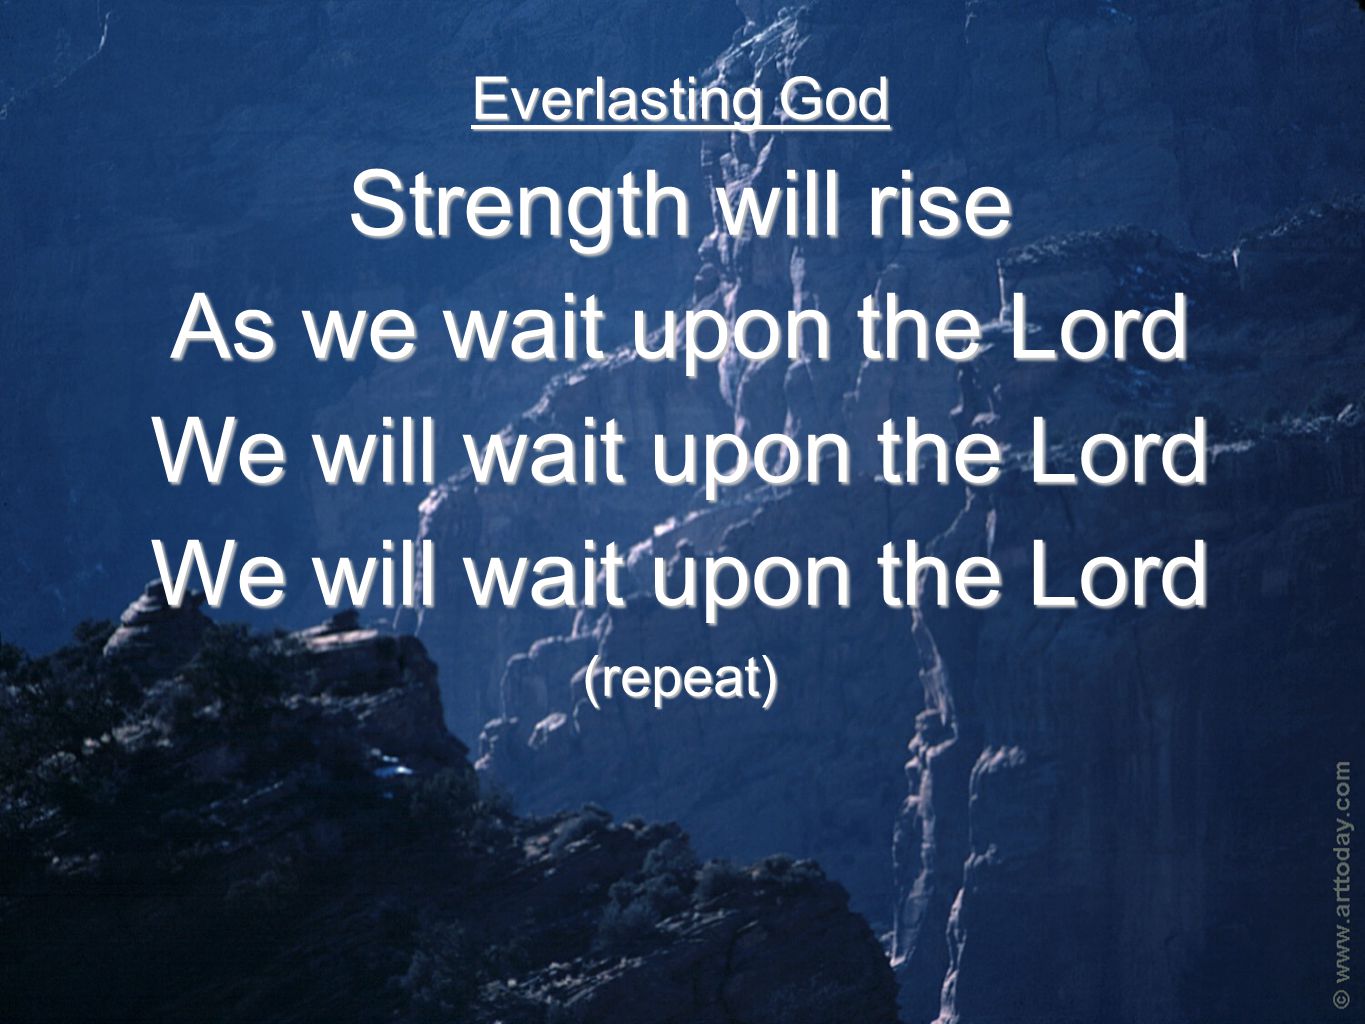 Everlasting God Strength will rise As we wait upon the Lord We will wait upon the Lord (repeat)